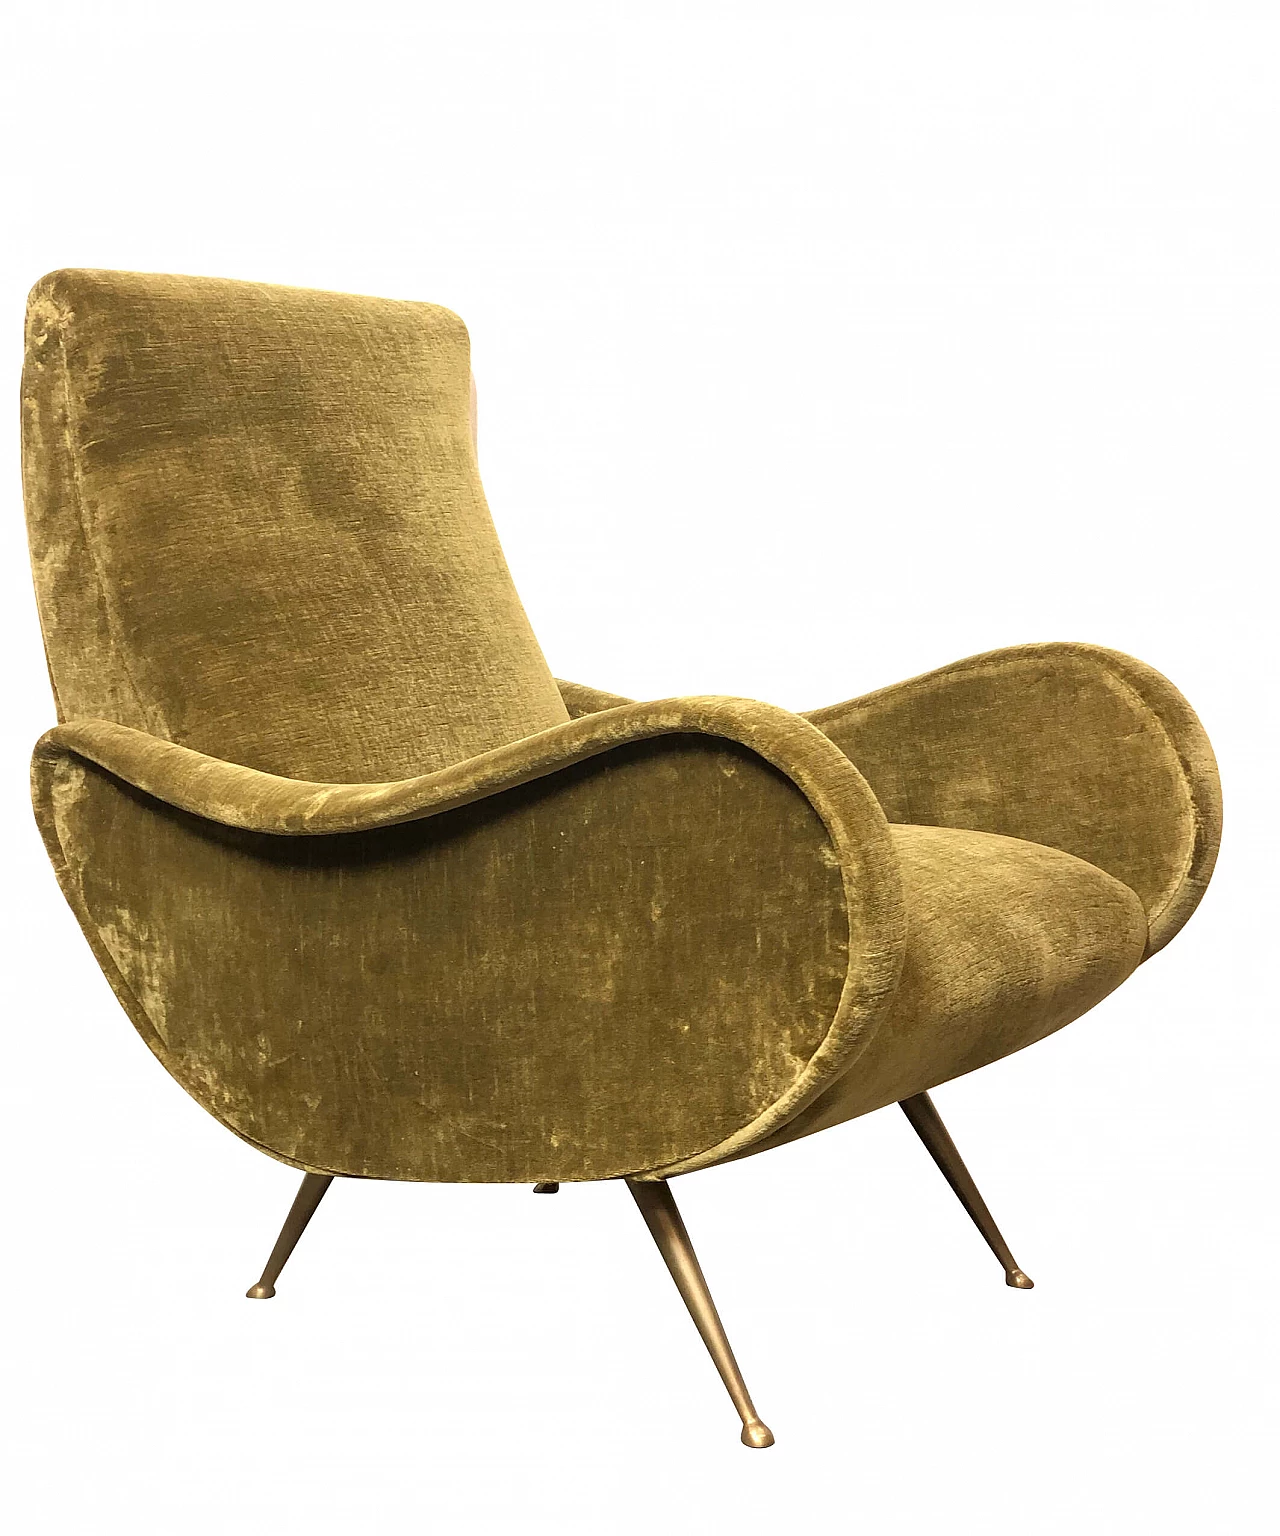 Lady style armchair by Marco Zanuso, 1950s 1278546